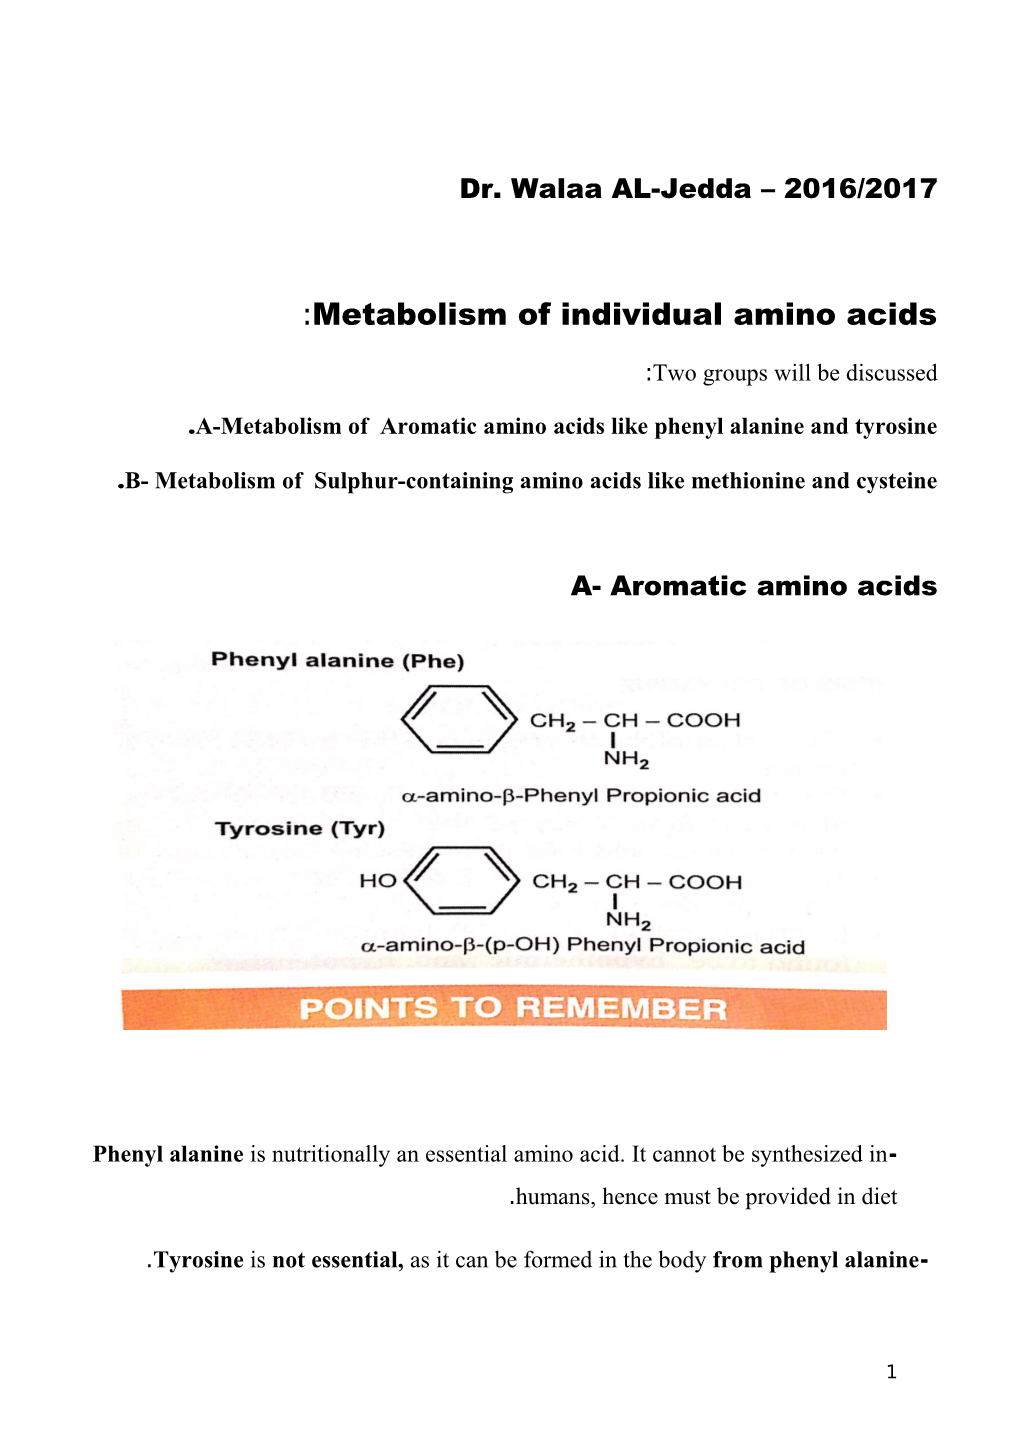 A-Metabolism of Aromatic Amino Acids Like Phenyl Alanine and Tyrosine